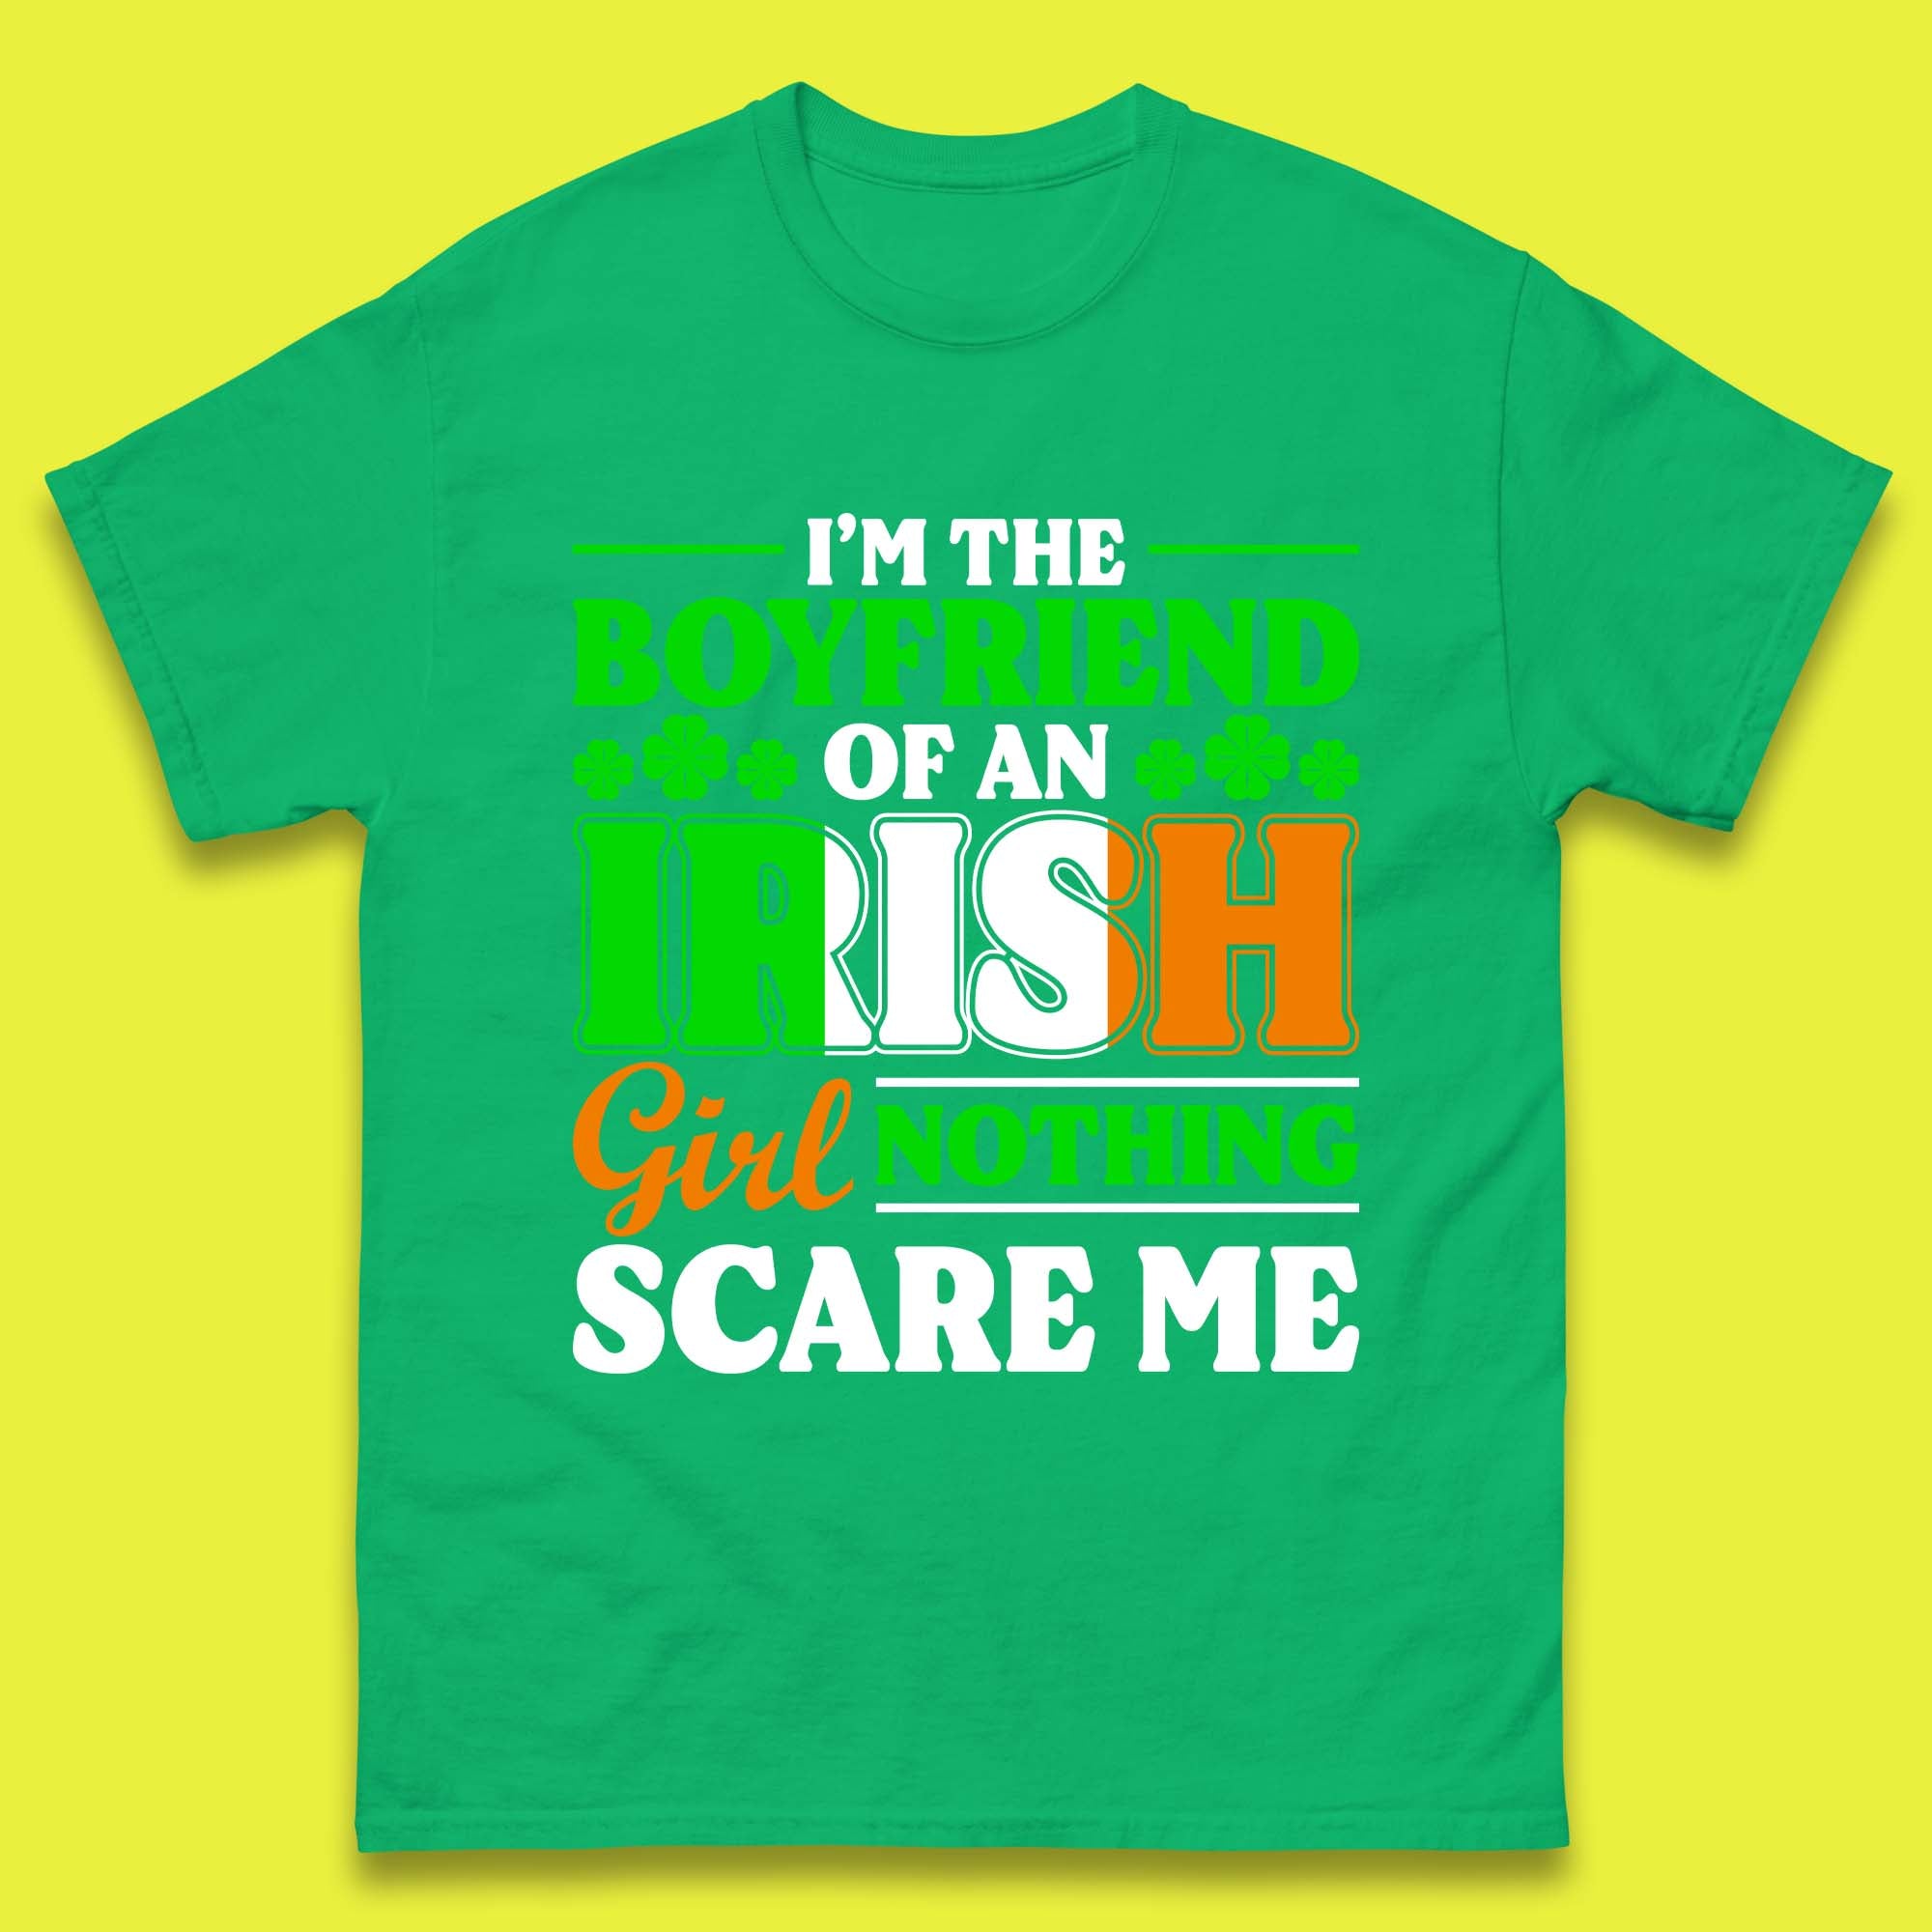 The Boyfriend Of An Irish Girl Mens T-Shirt